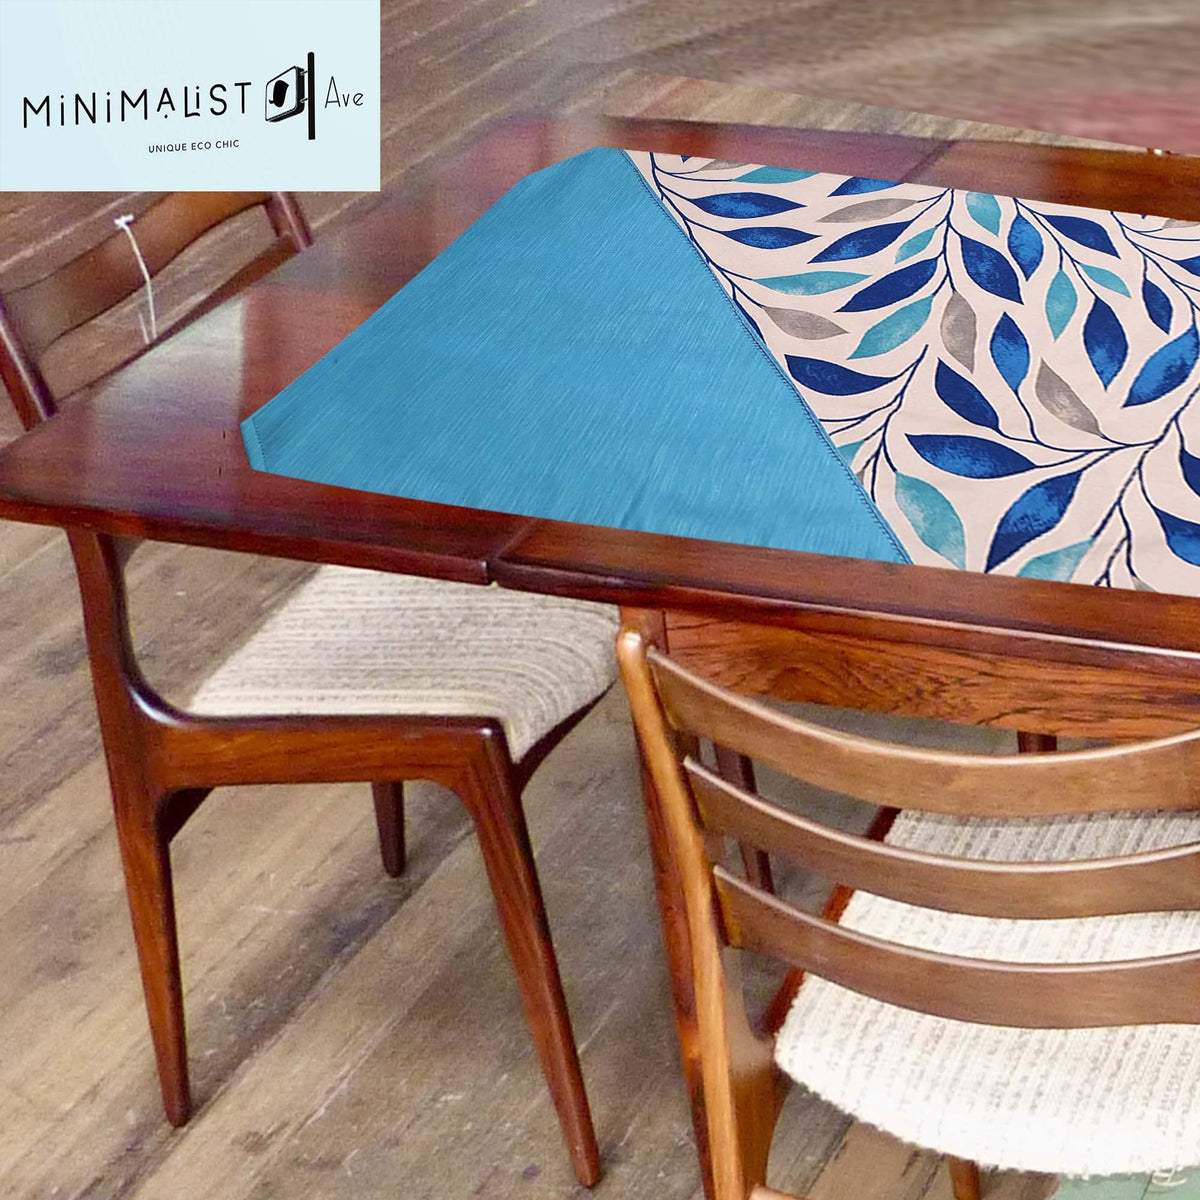 Reversible table runner, stylish unique design, nature print, royal turquoise tones. 4.5 ft long, turquoise, leaves print, minimalist, minimalistave, minimalistave.com